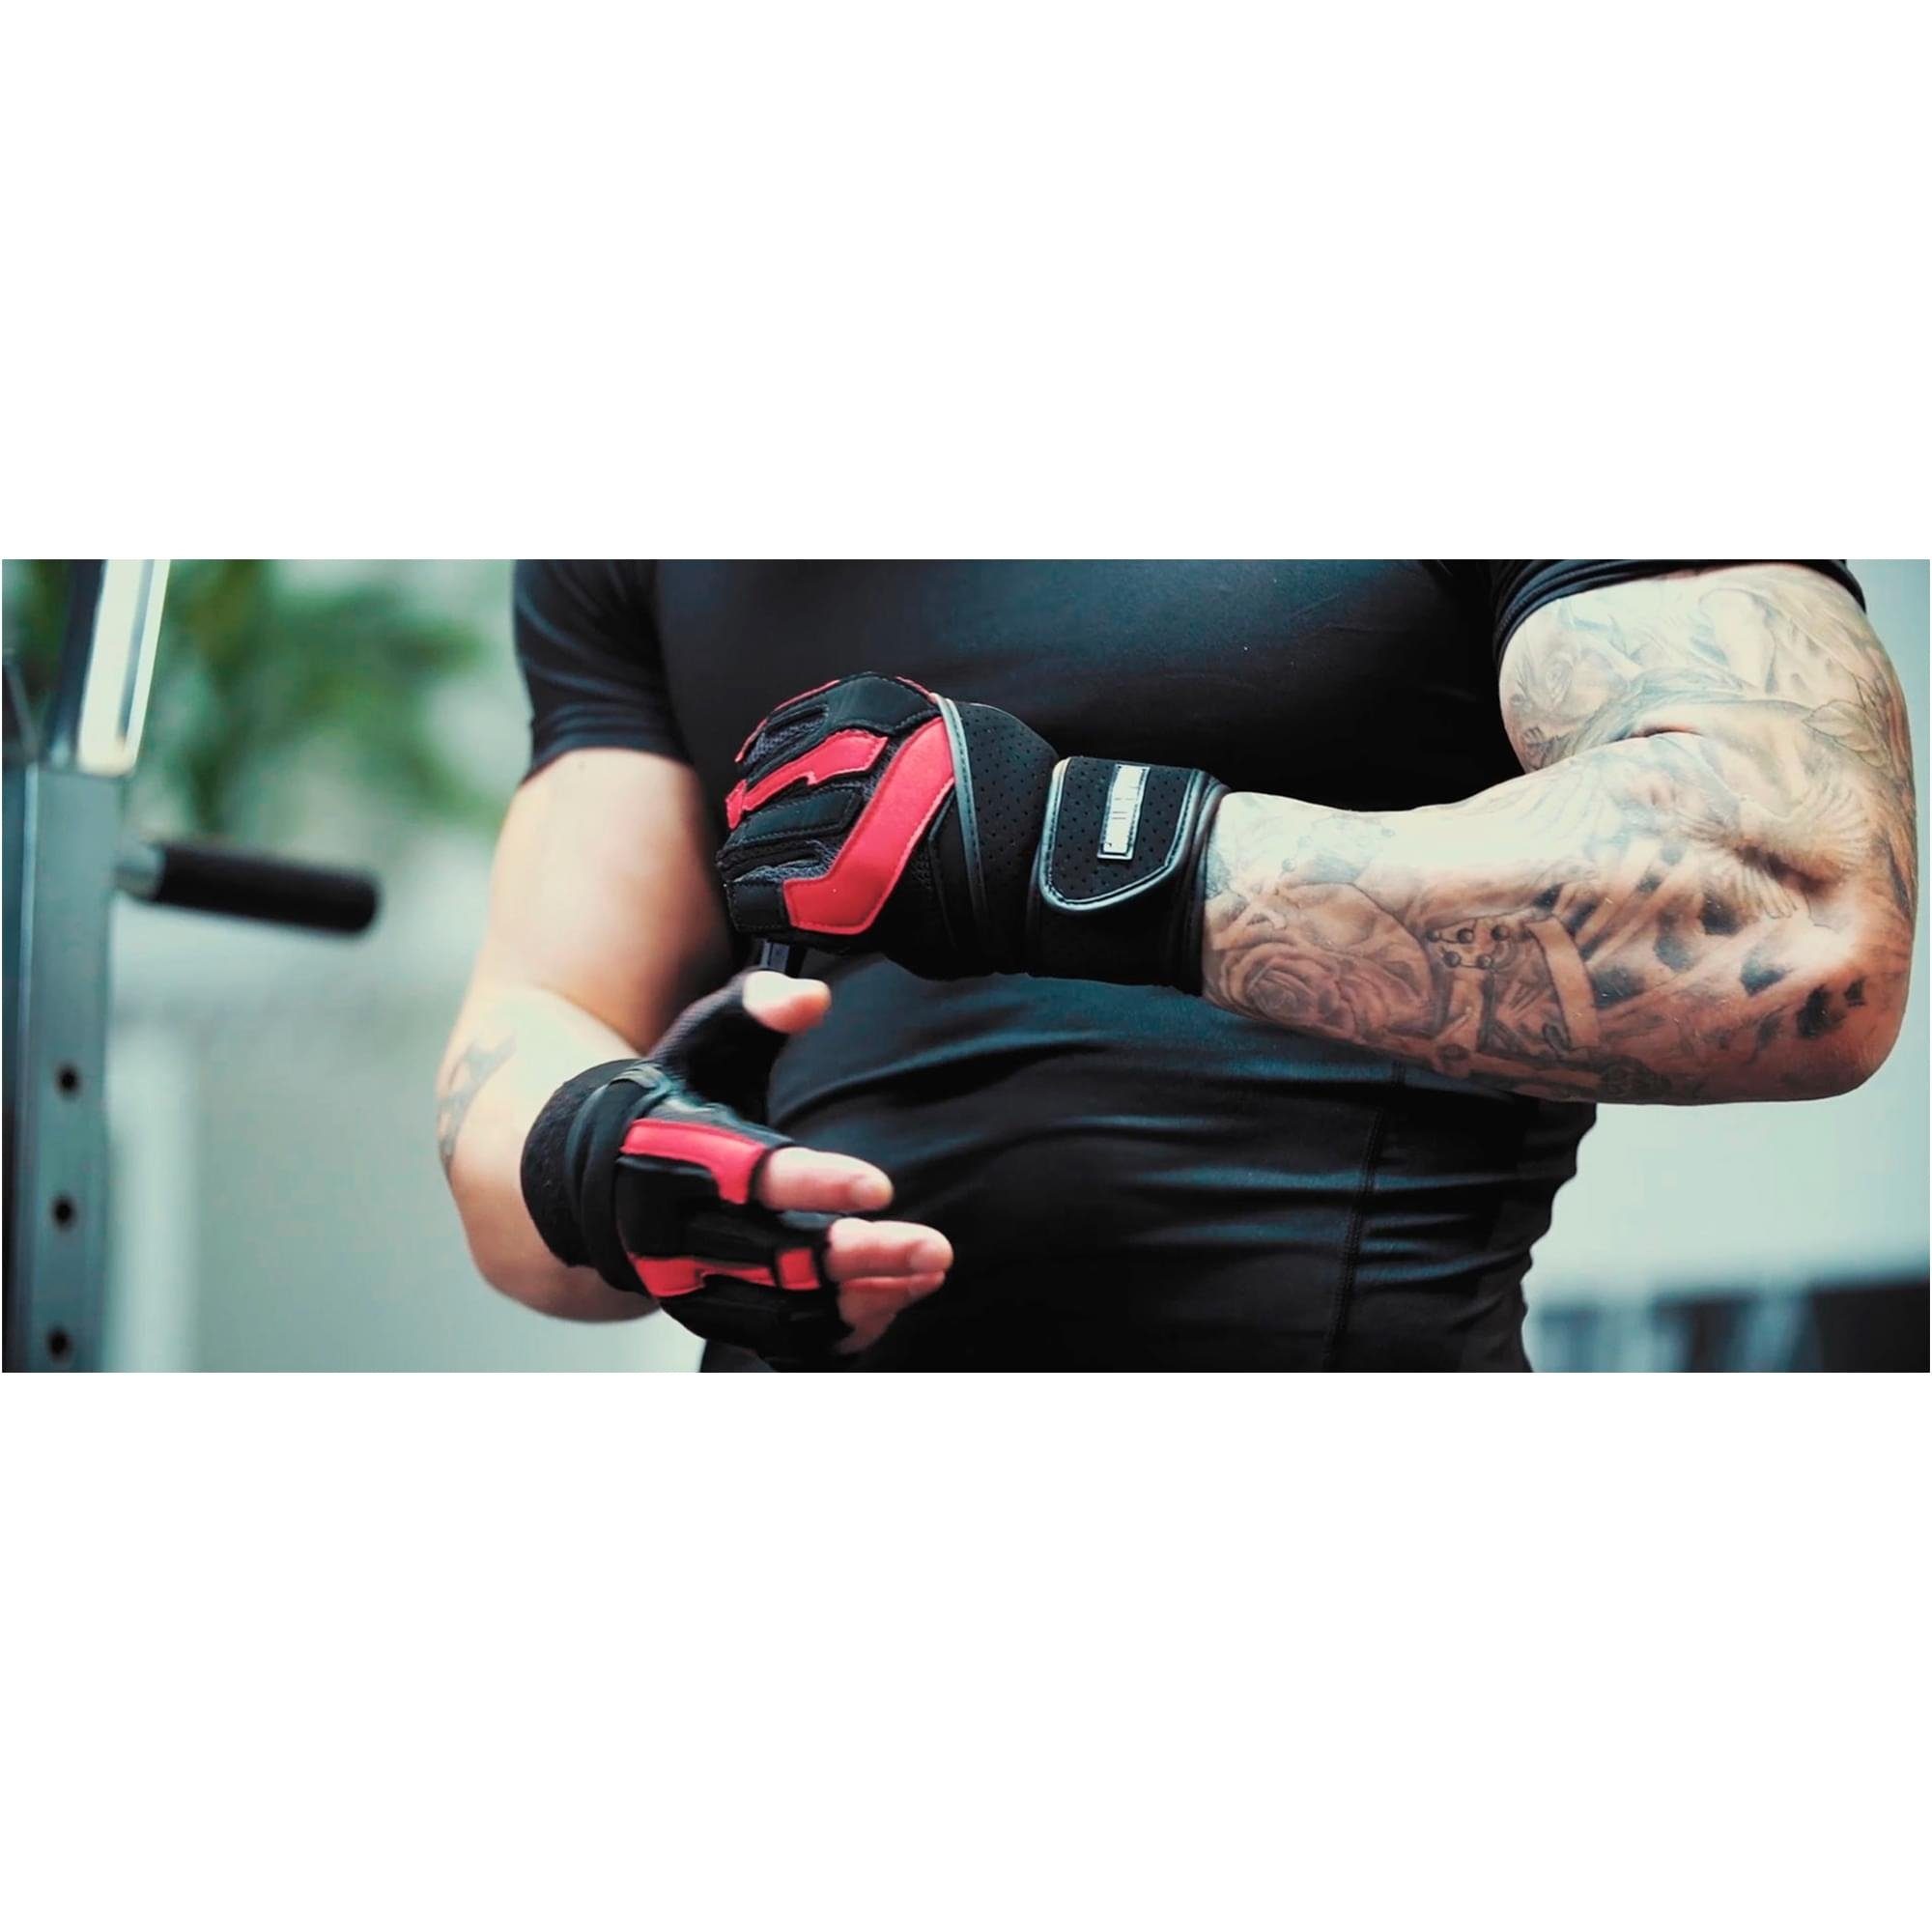 Trainingshandschuhe - mit Leder, SPORTS Sporthandschuhe Handgelenkstütze, GORILLA Fitness Handschuhe